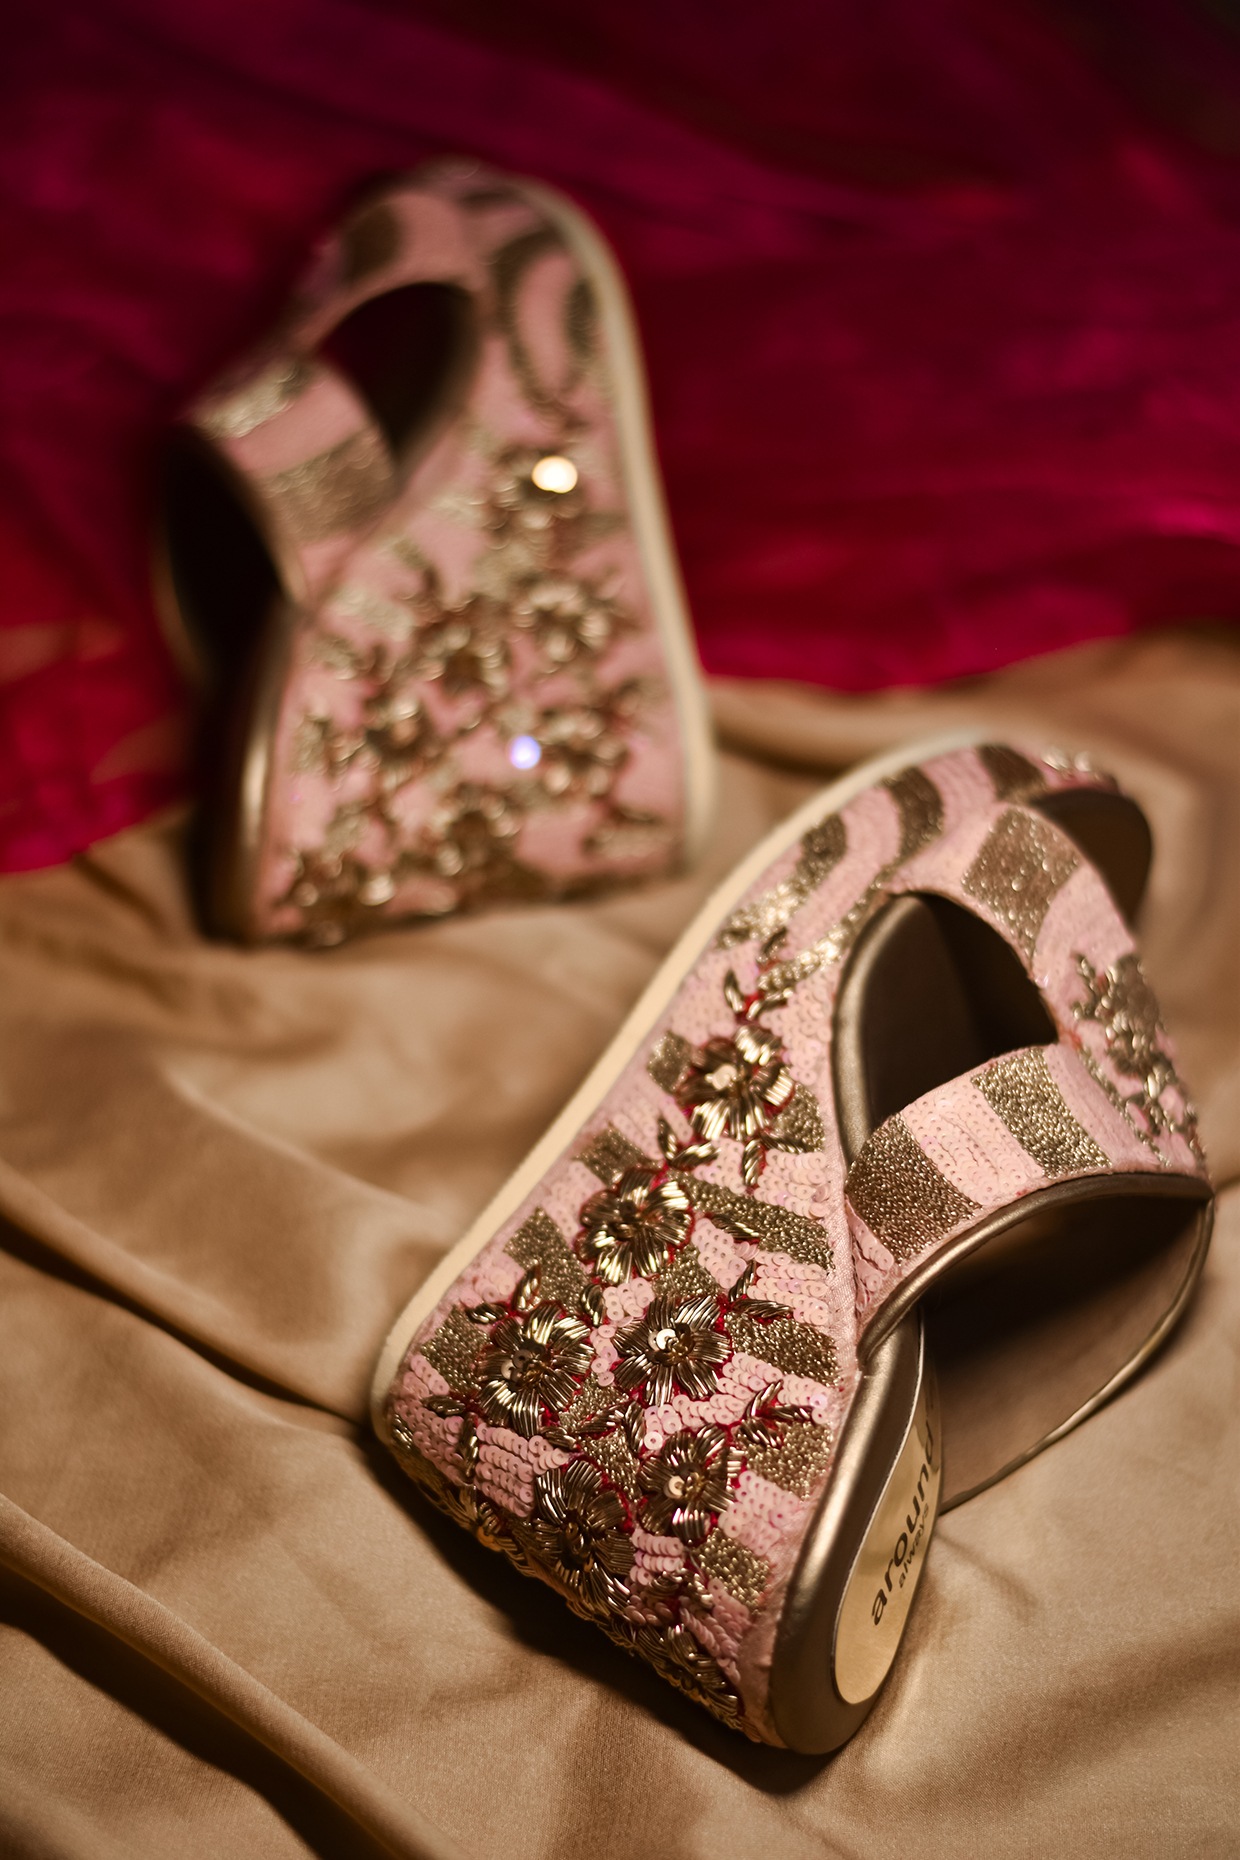 Handmade Maroon embroidered heels for bridal, Wedding Heel for women, Women  Shoe | eBay